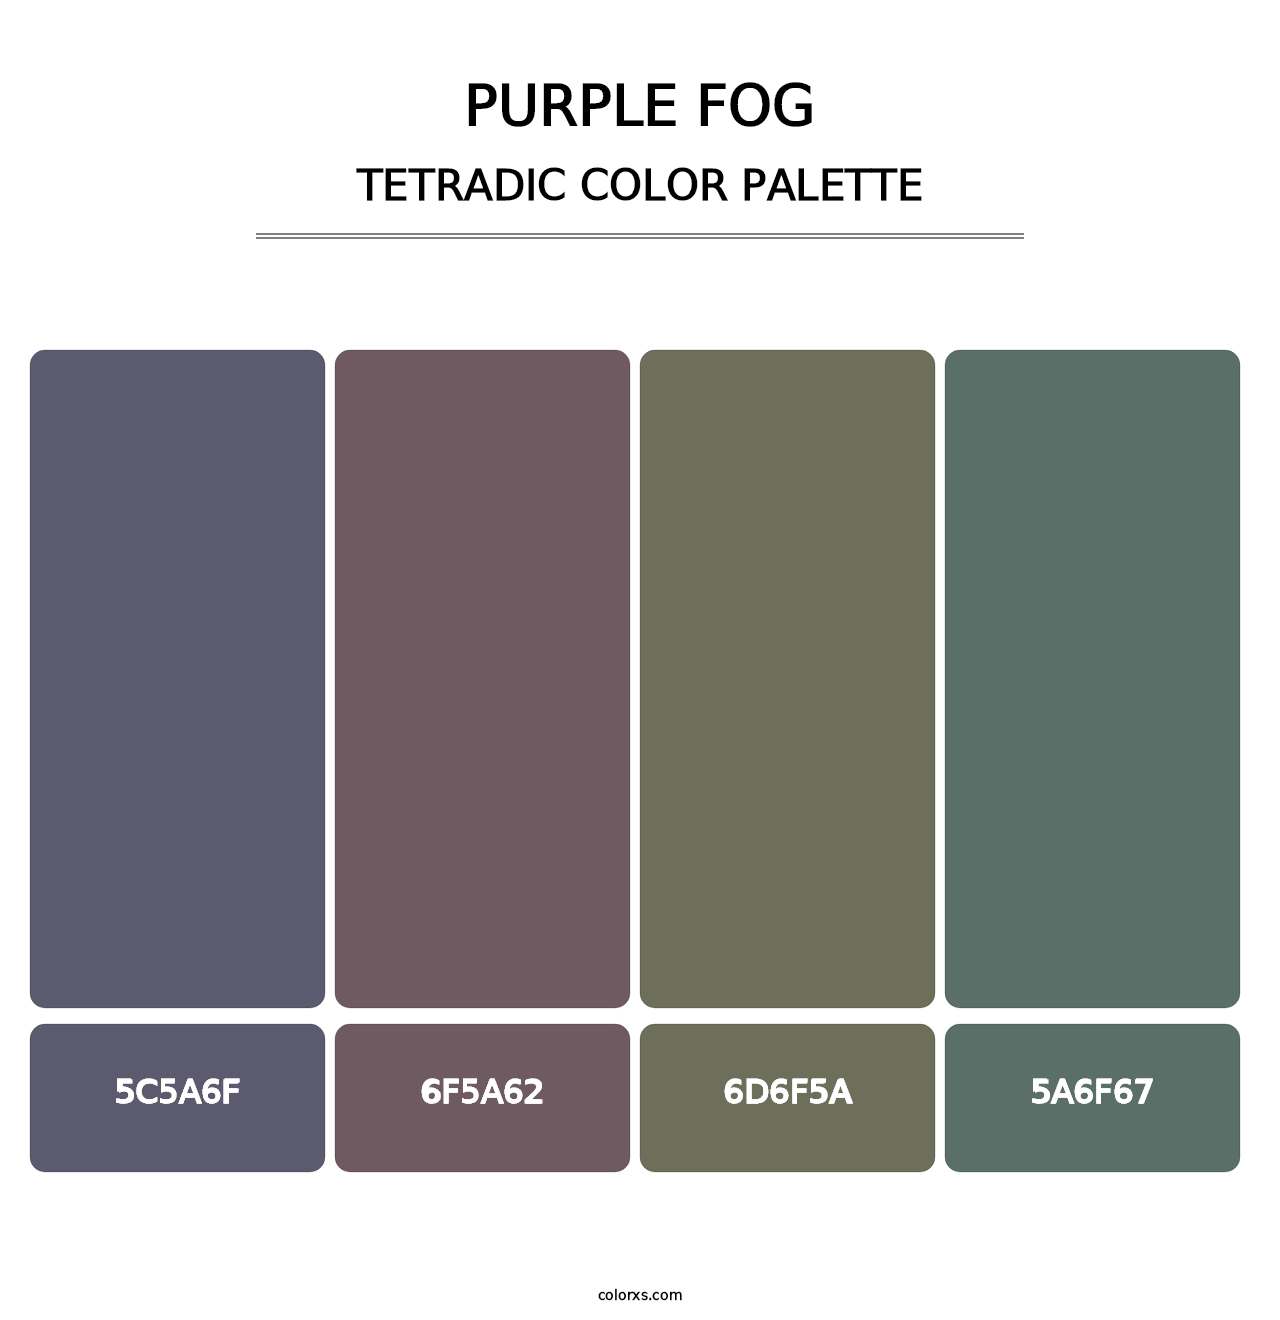 Purple Fog - Tetradic Color Palette